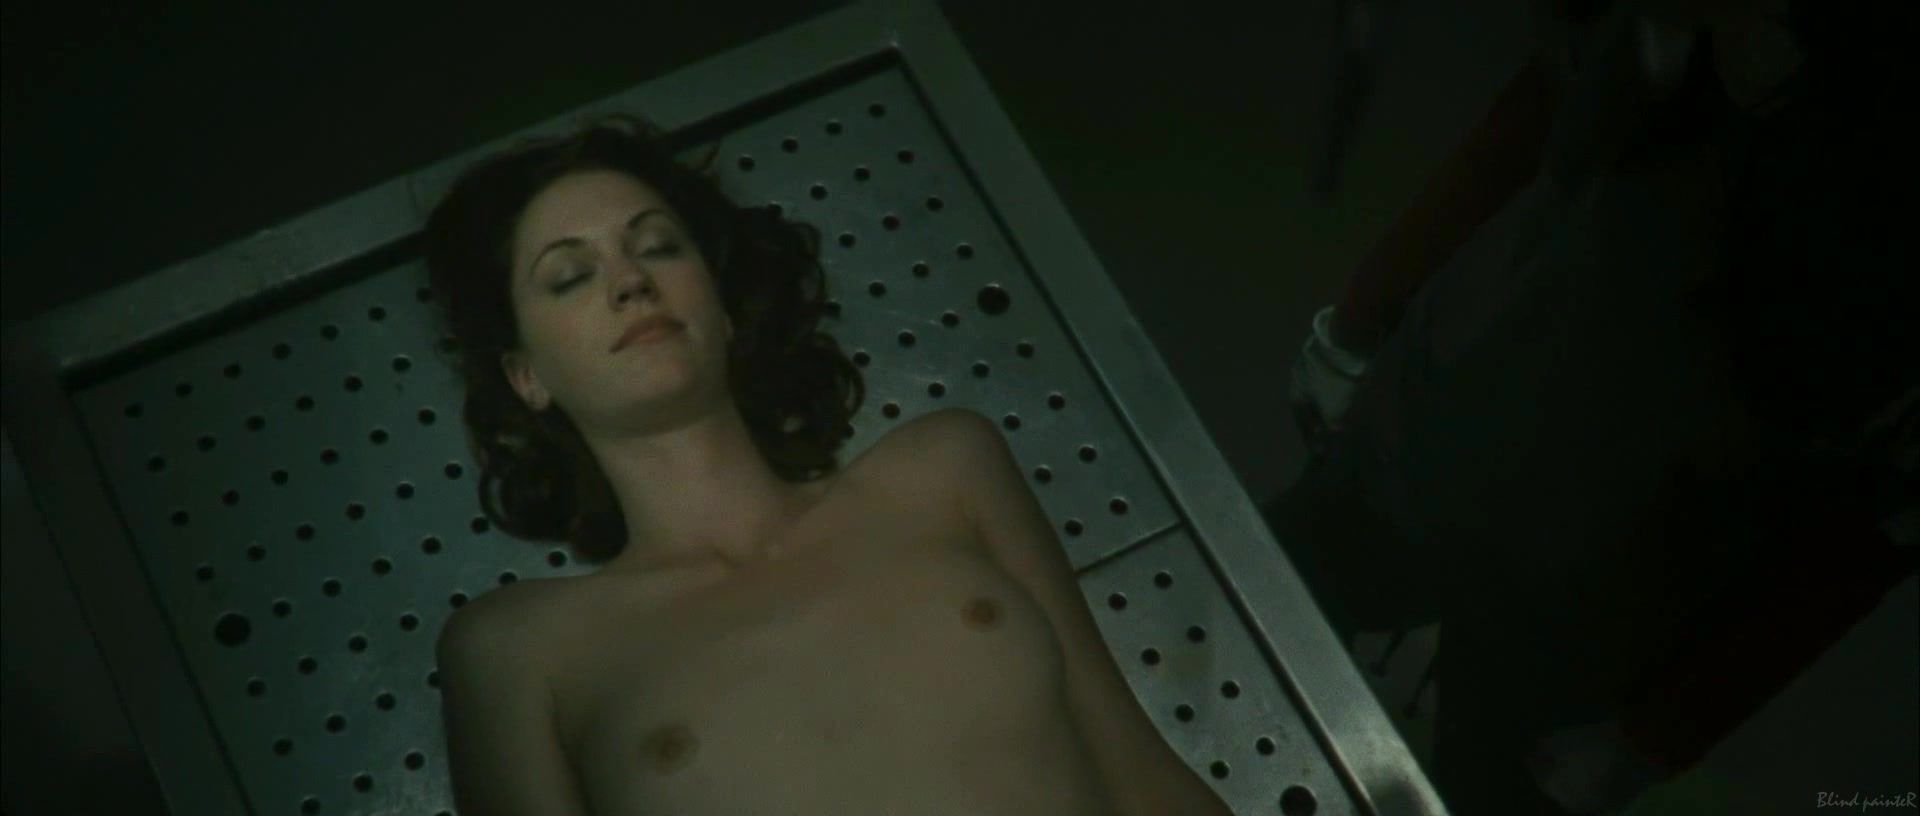 Nylons Sex video Lauren Lee Smith nude - Pathology (2008) Cums